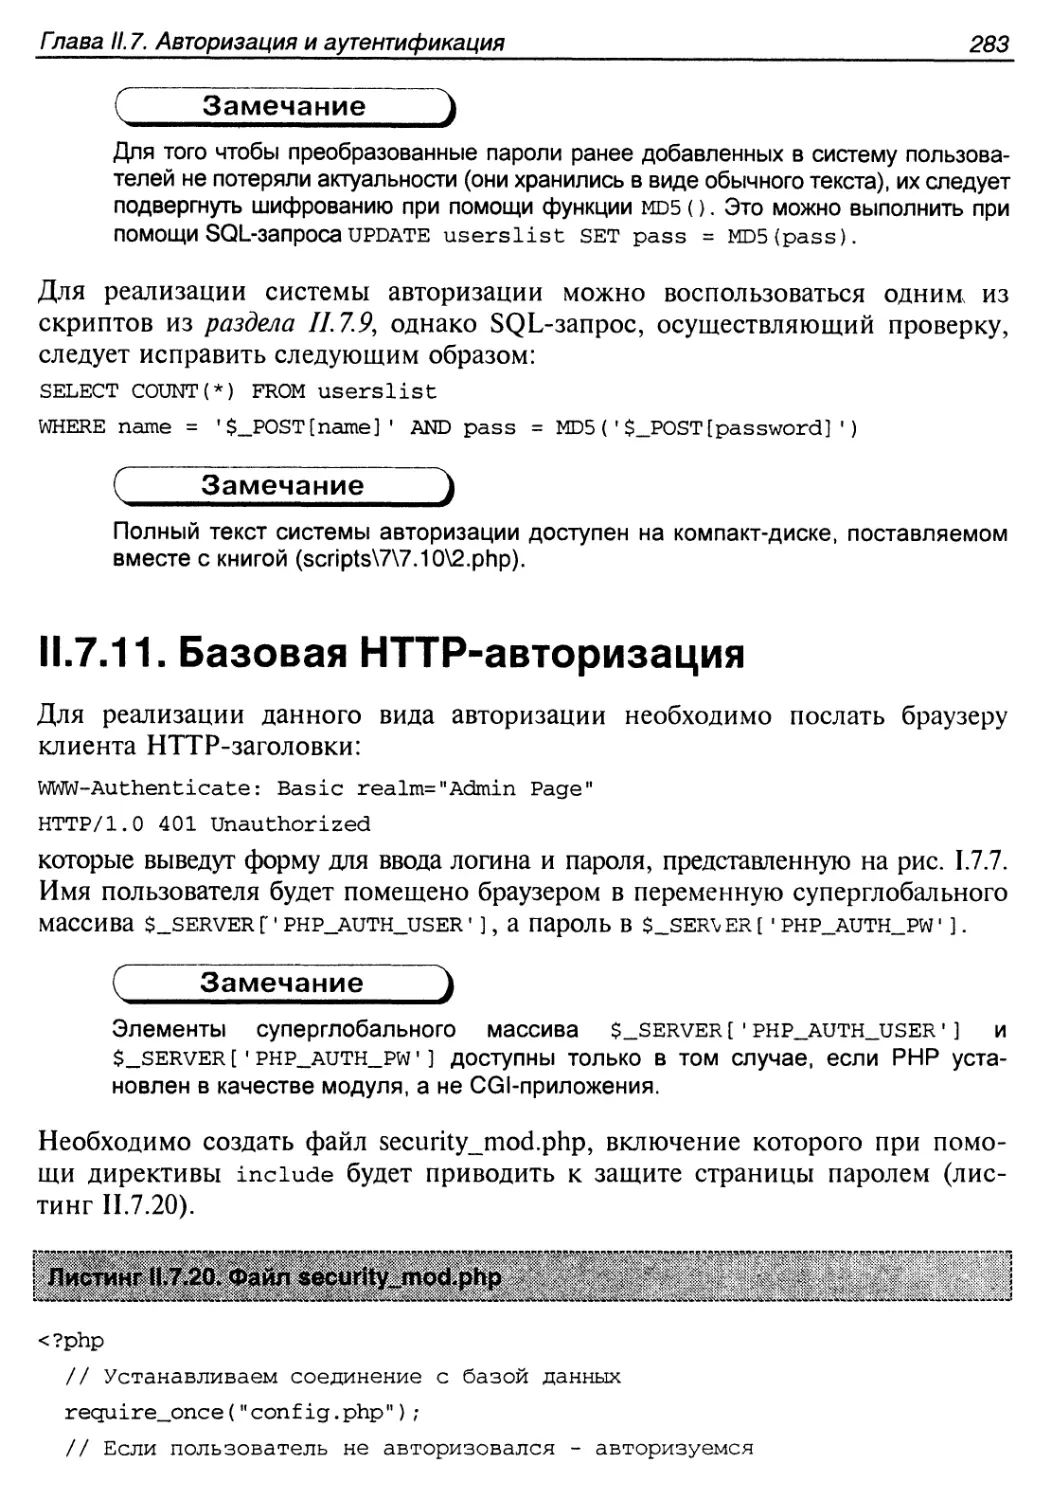 II.7.11. Базовая HTTP-авторизация